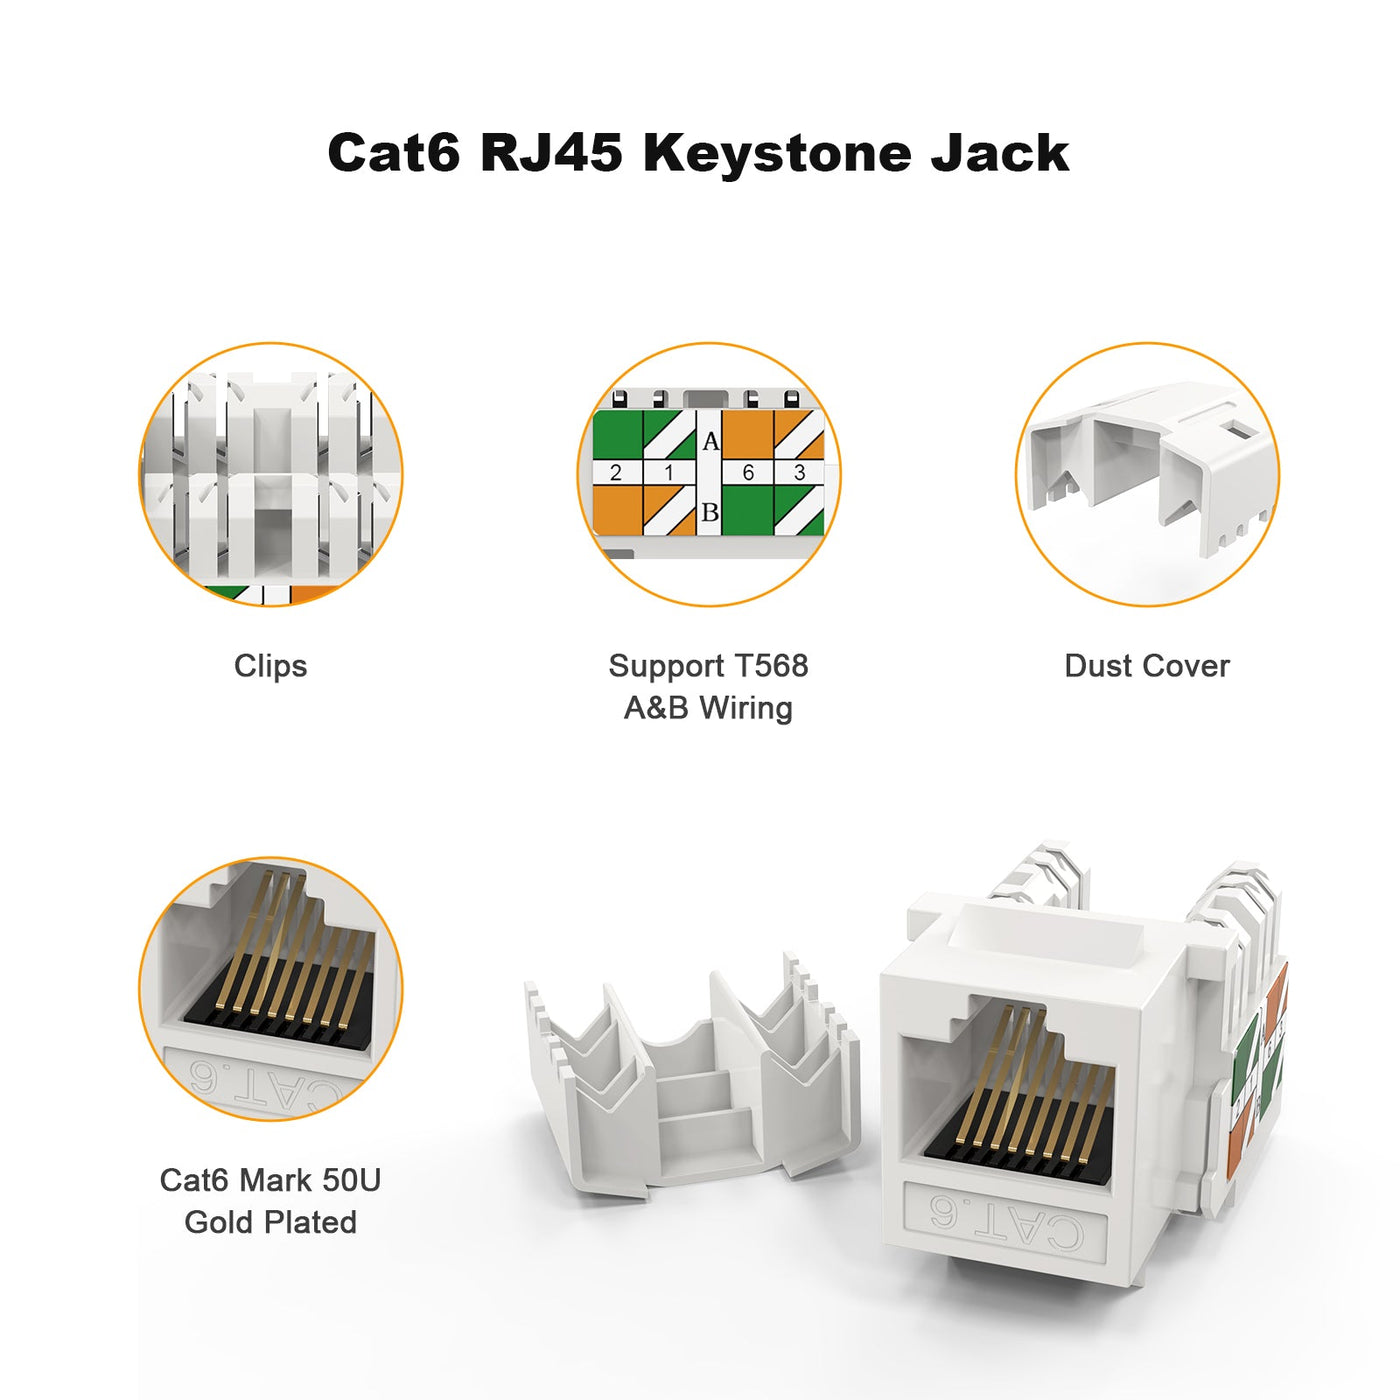 Red Rj45 Modular Jack Cat6 Rj45 Hembra Keystone Jack Fabricantes y  proveedores